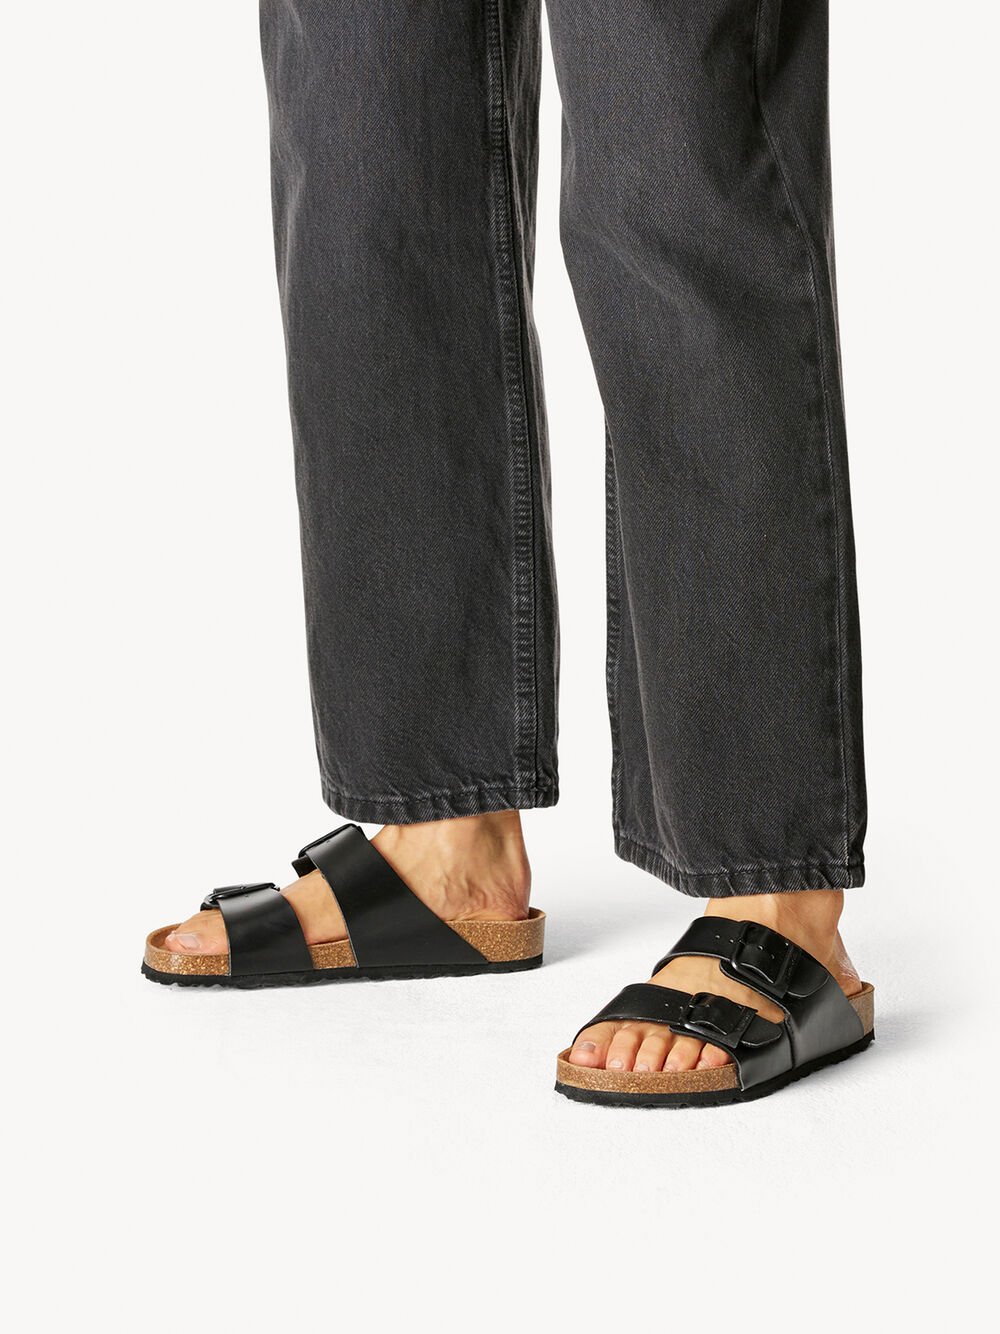 Summer-Ready Flat Black Sandals